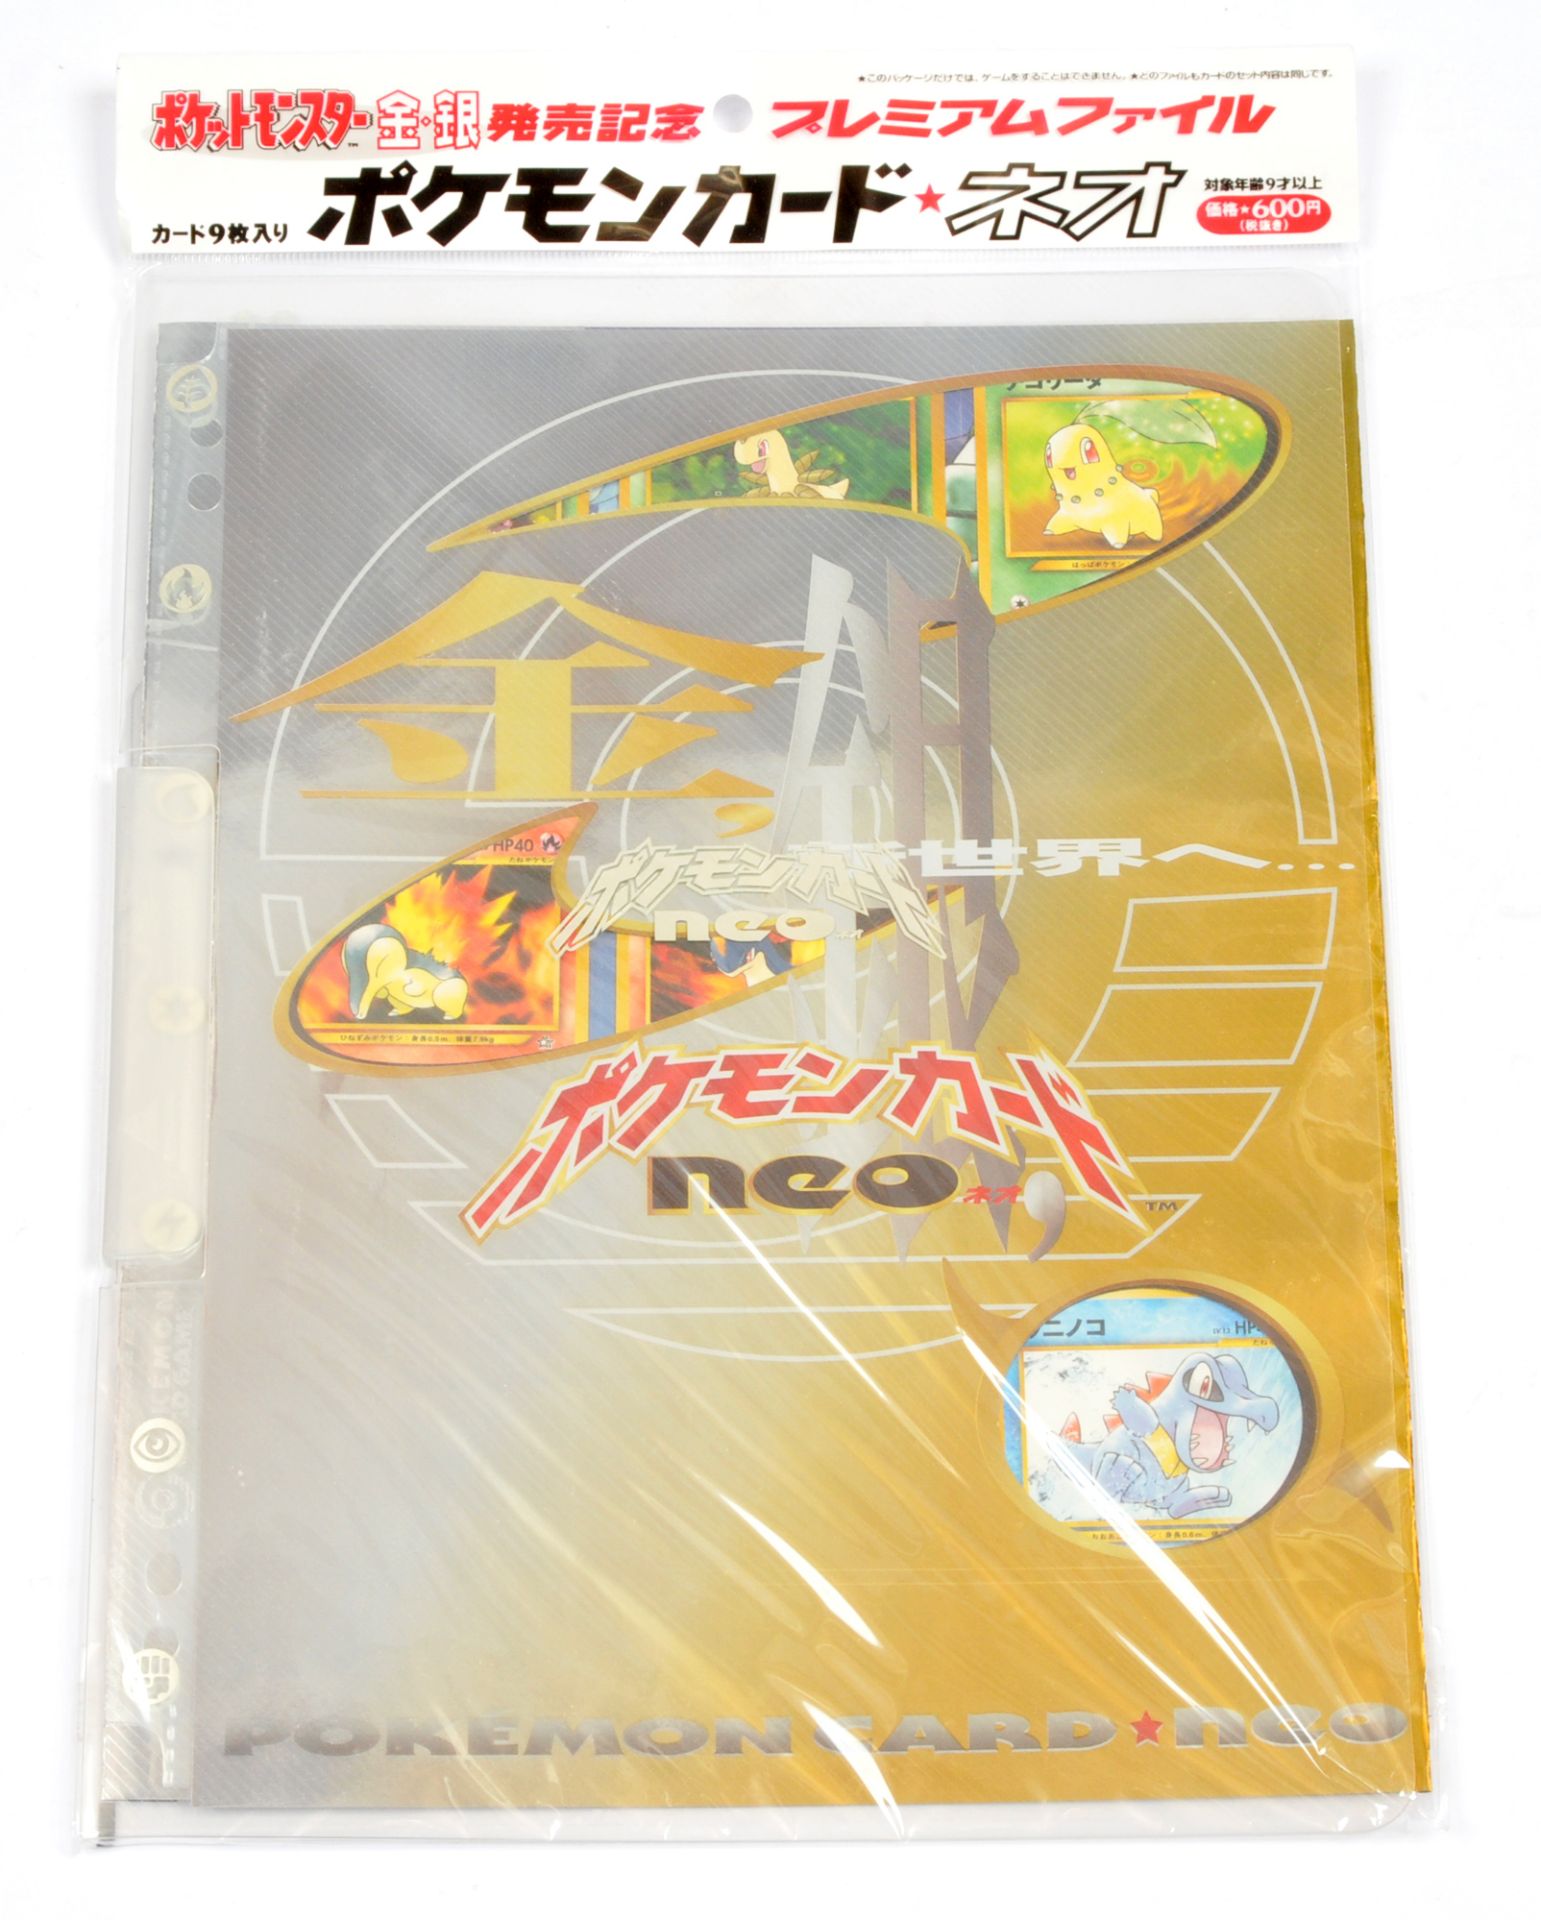 Japanese Pokemon Card Neo Gold and Silver Release Commemorative Premium File